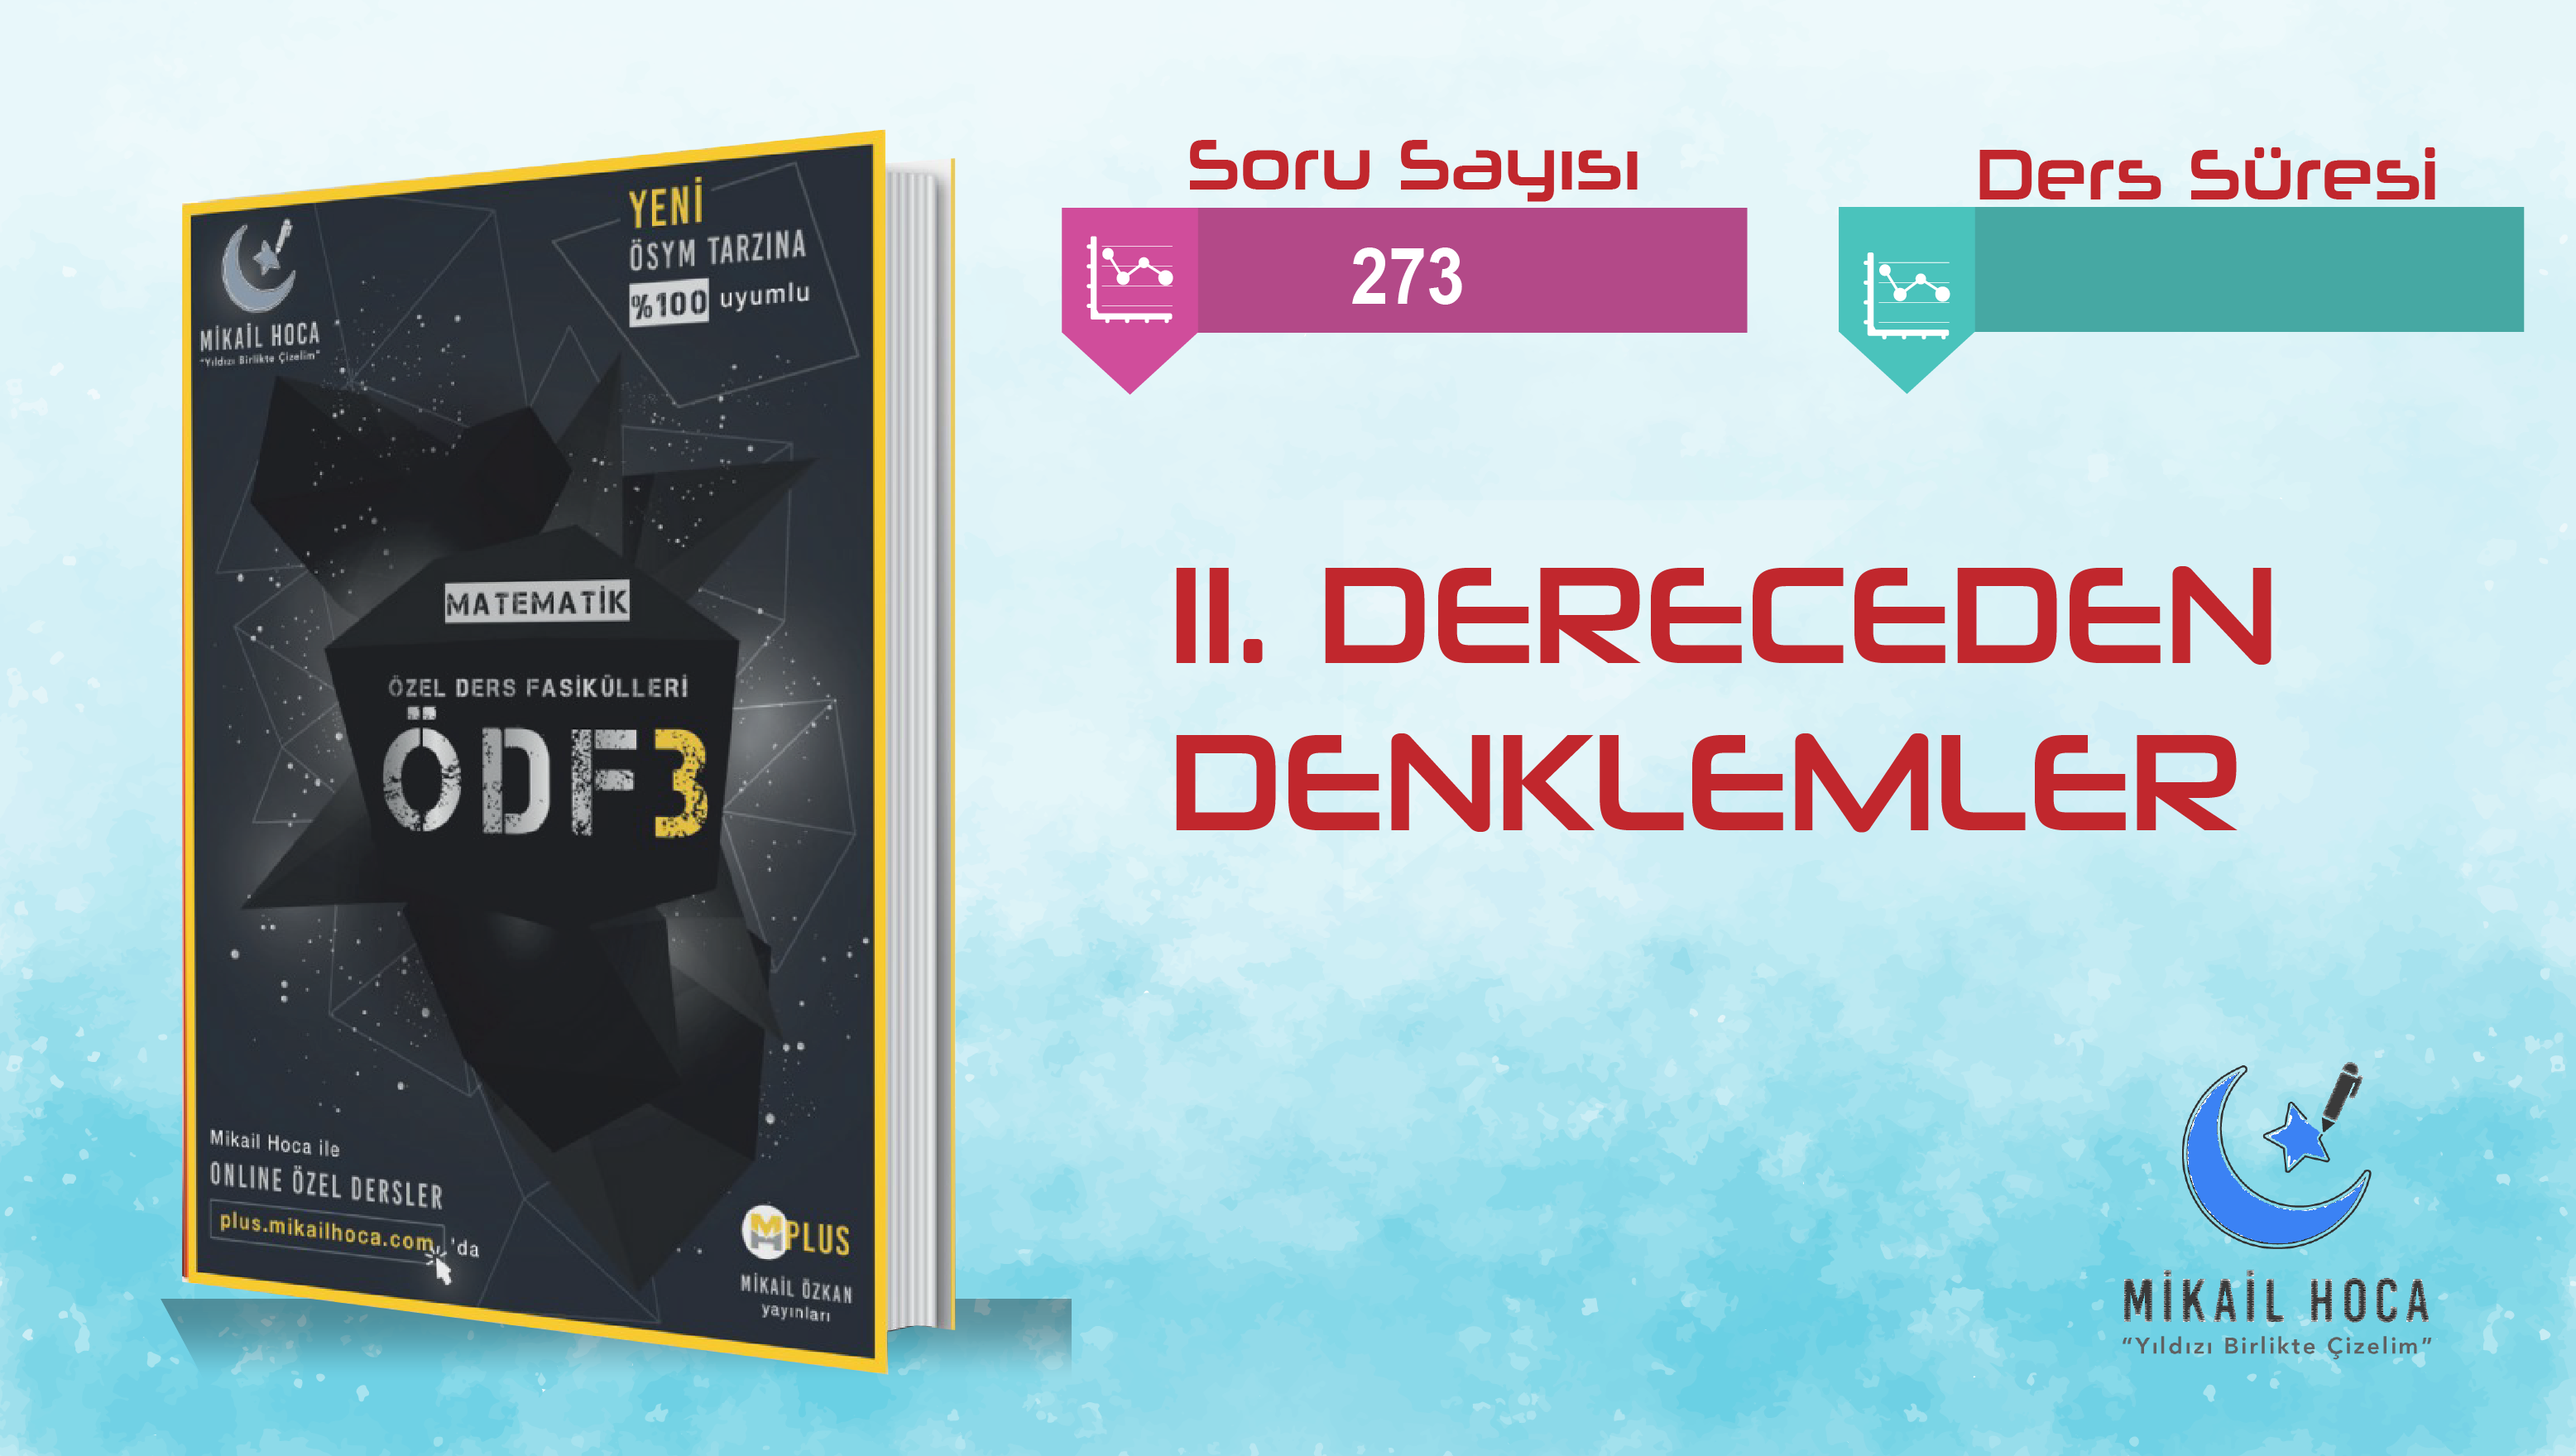 İKİNCİ DERECEDEN DENKLEMLER ÖDF-3